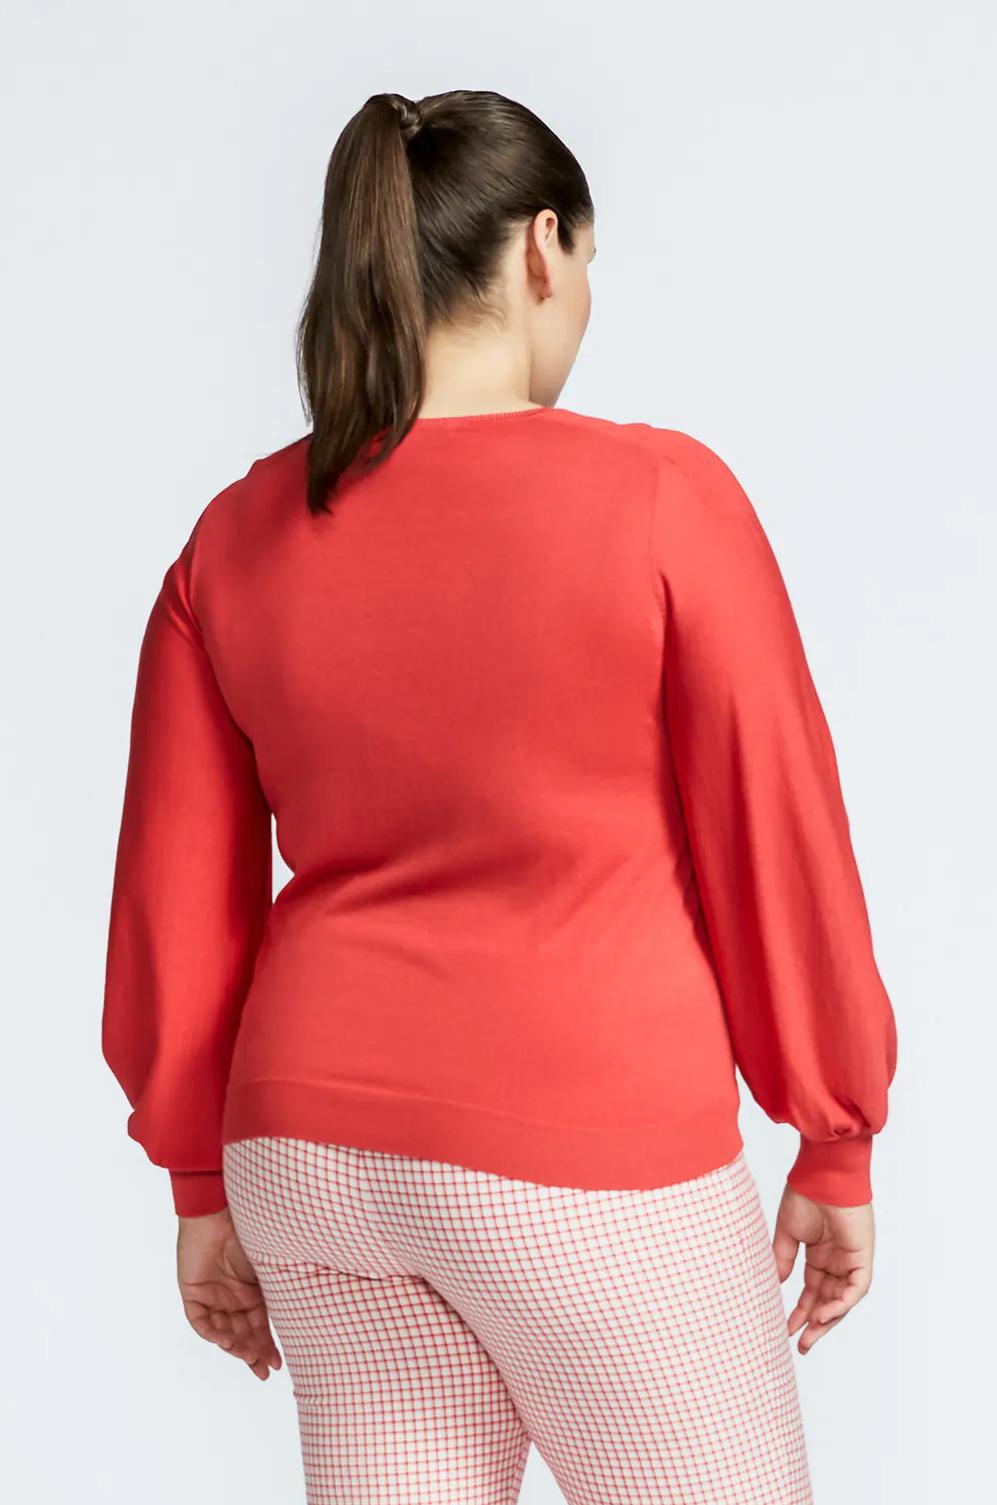 rode trui in zijdemix - xandres - - grote maten - dameskleding - kledingwinkel - herent - leuven